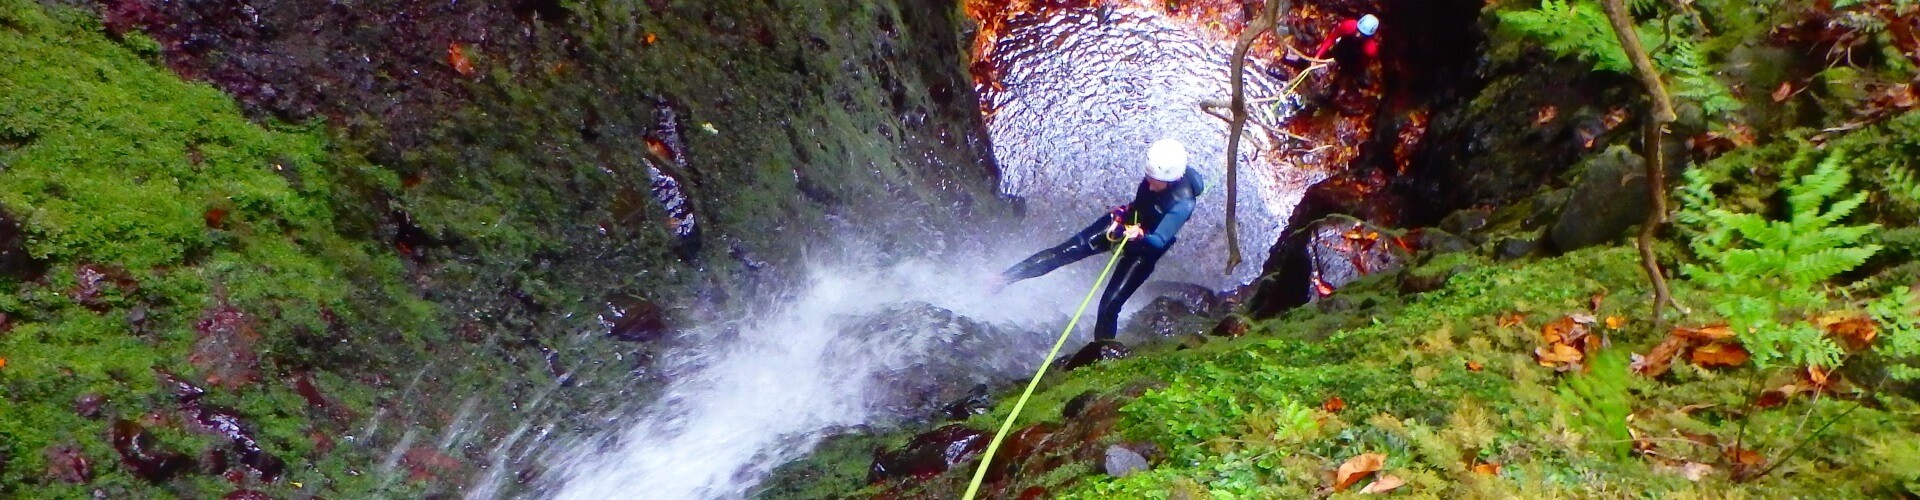 Canyoning Nível 1 - Iniciantes, Ilha da Madeira